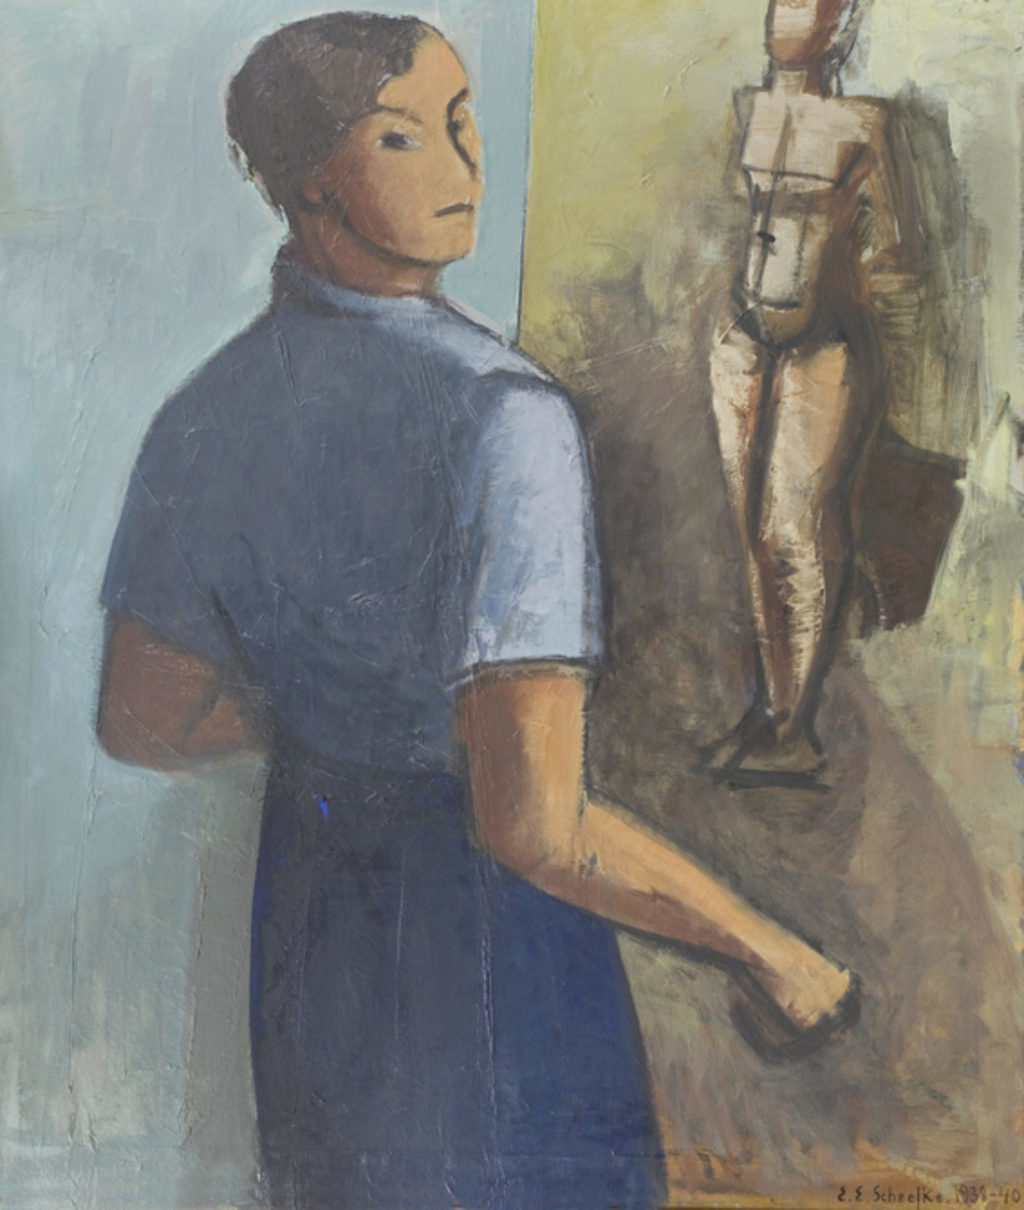 Ellen Scheelke, "Selvportræt", 1938-1940. Ribe Kunstmuseum